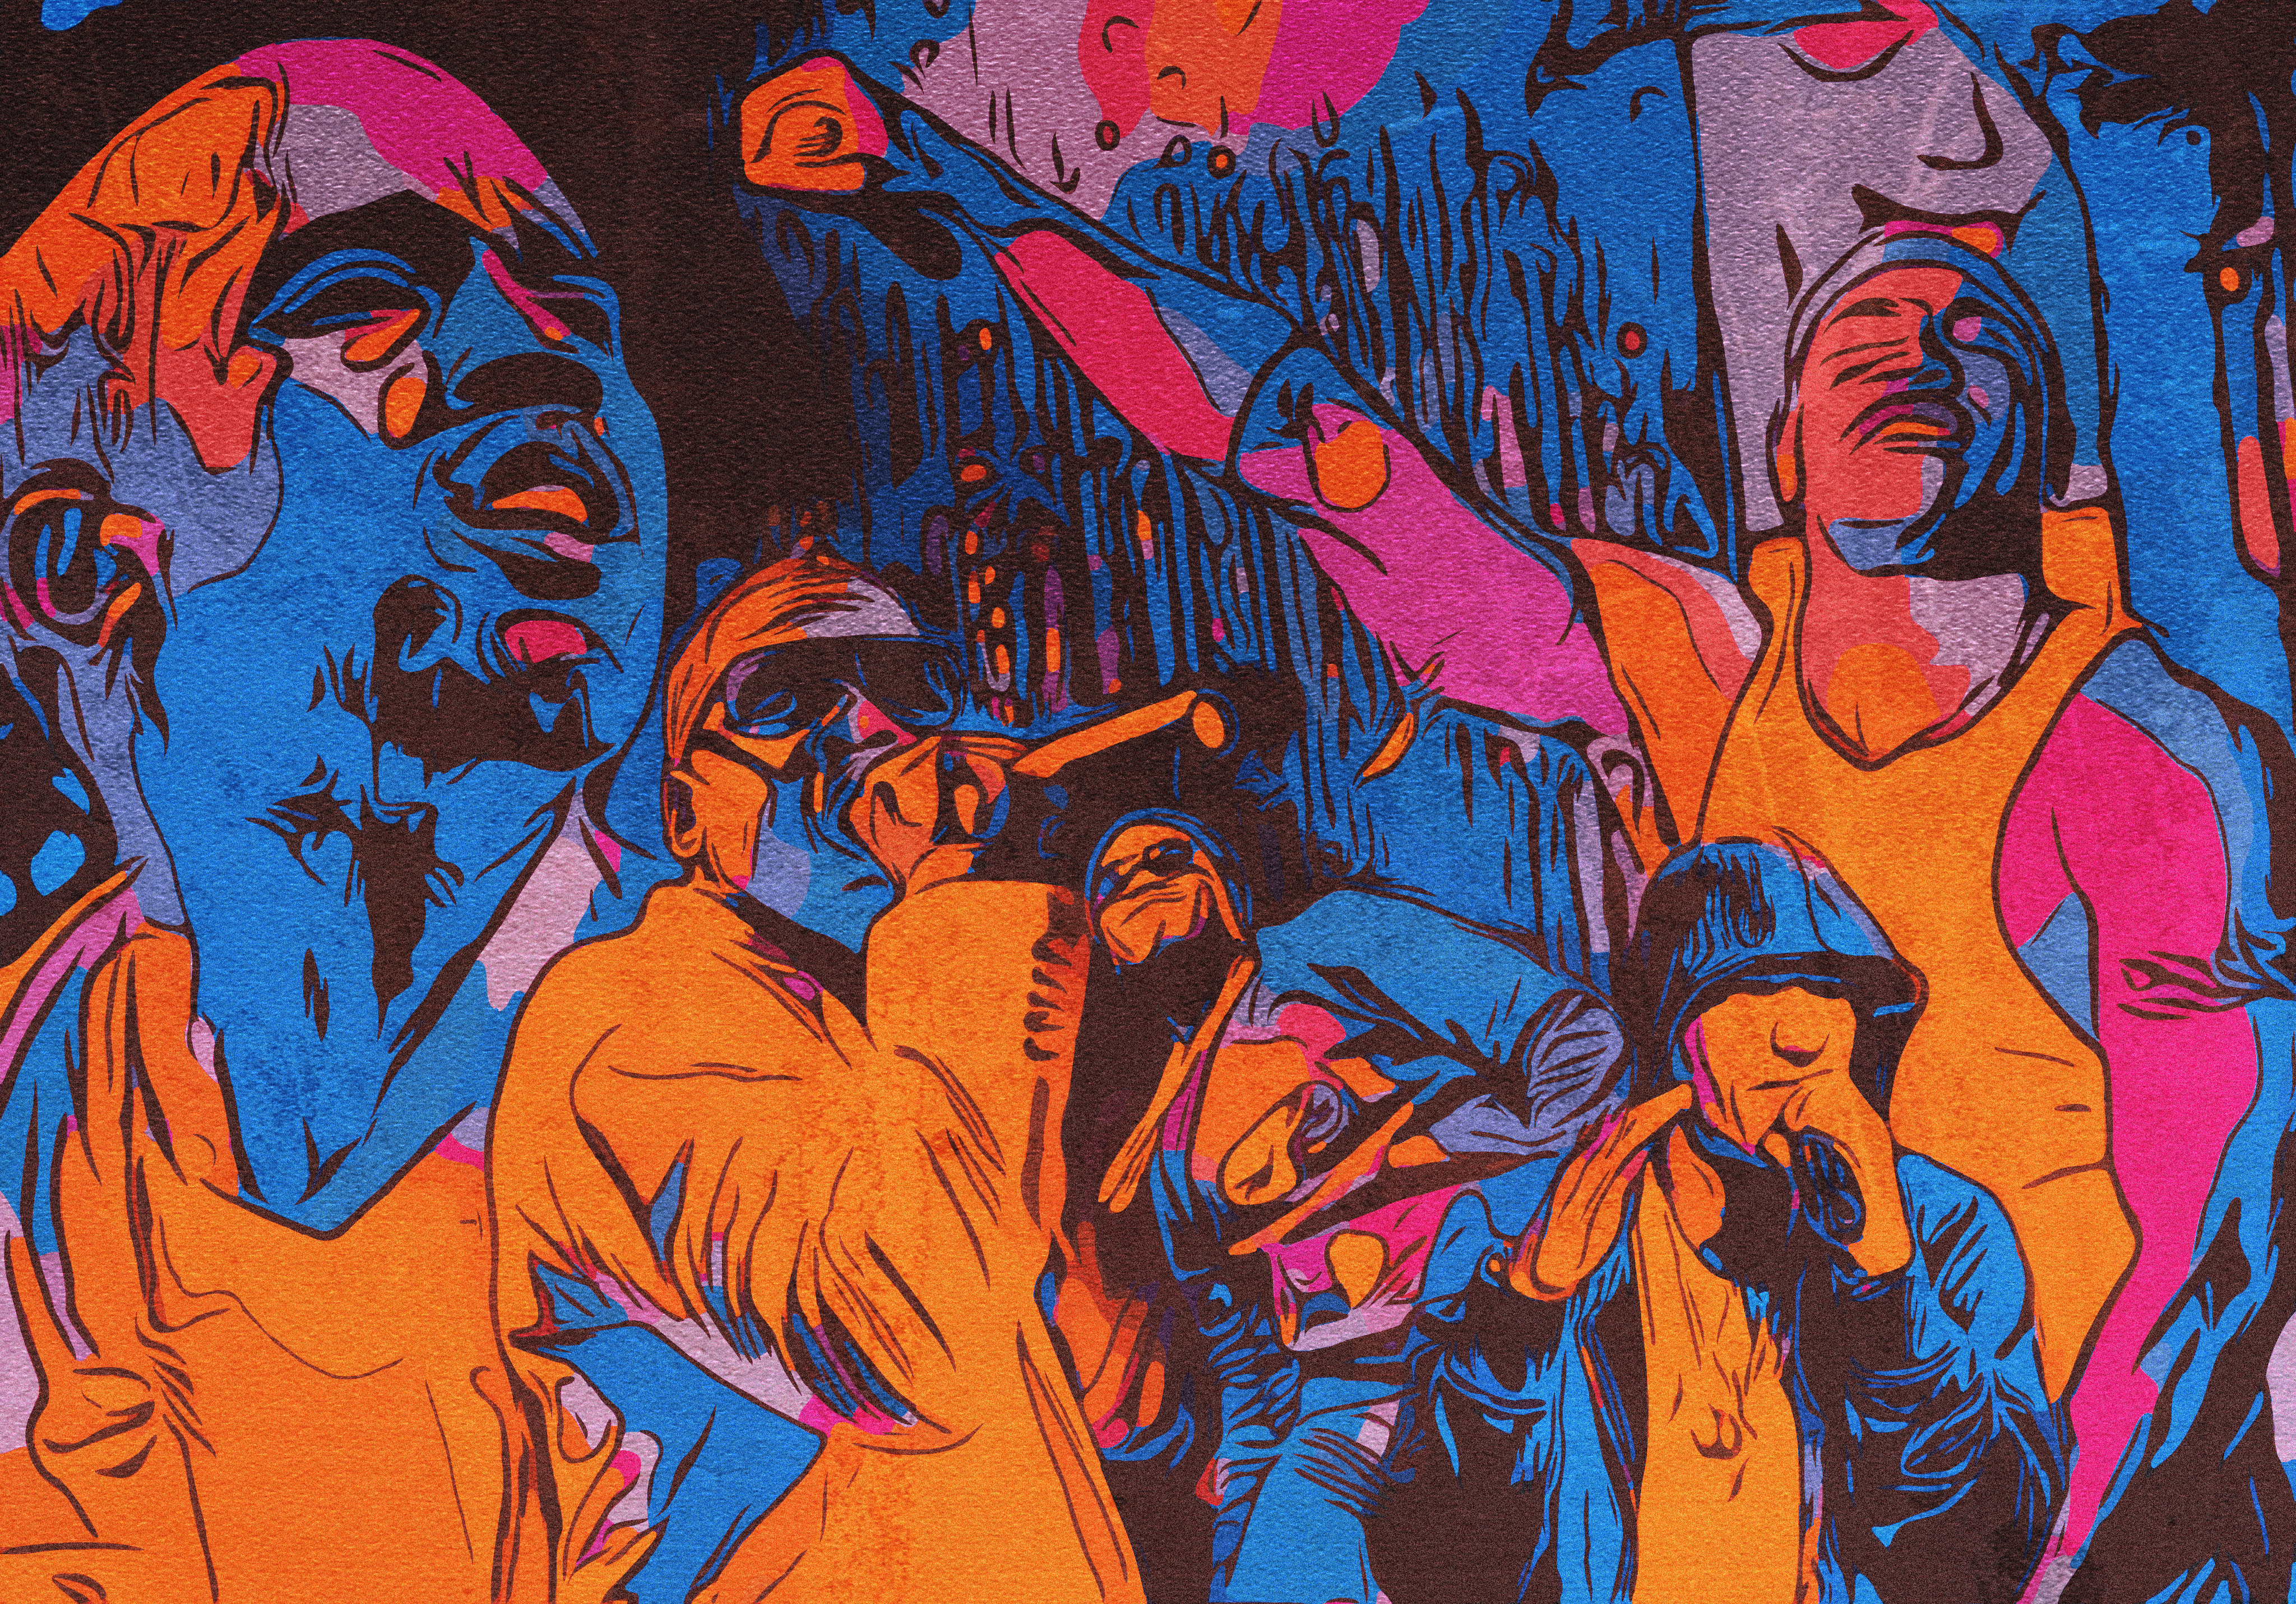 Hip Hop 50 Bling Hoodie (Gold) – Urban Legends Store